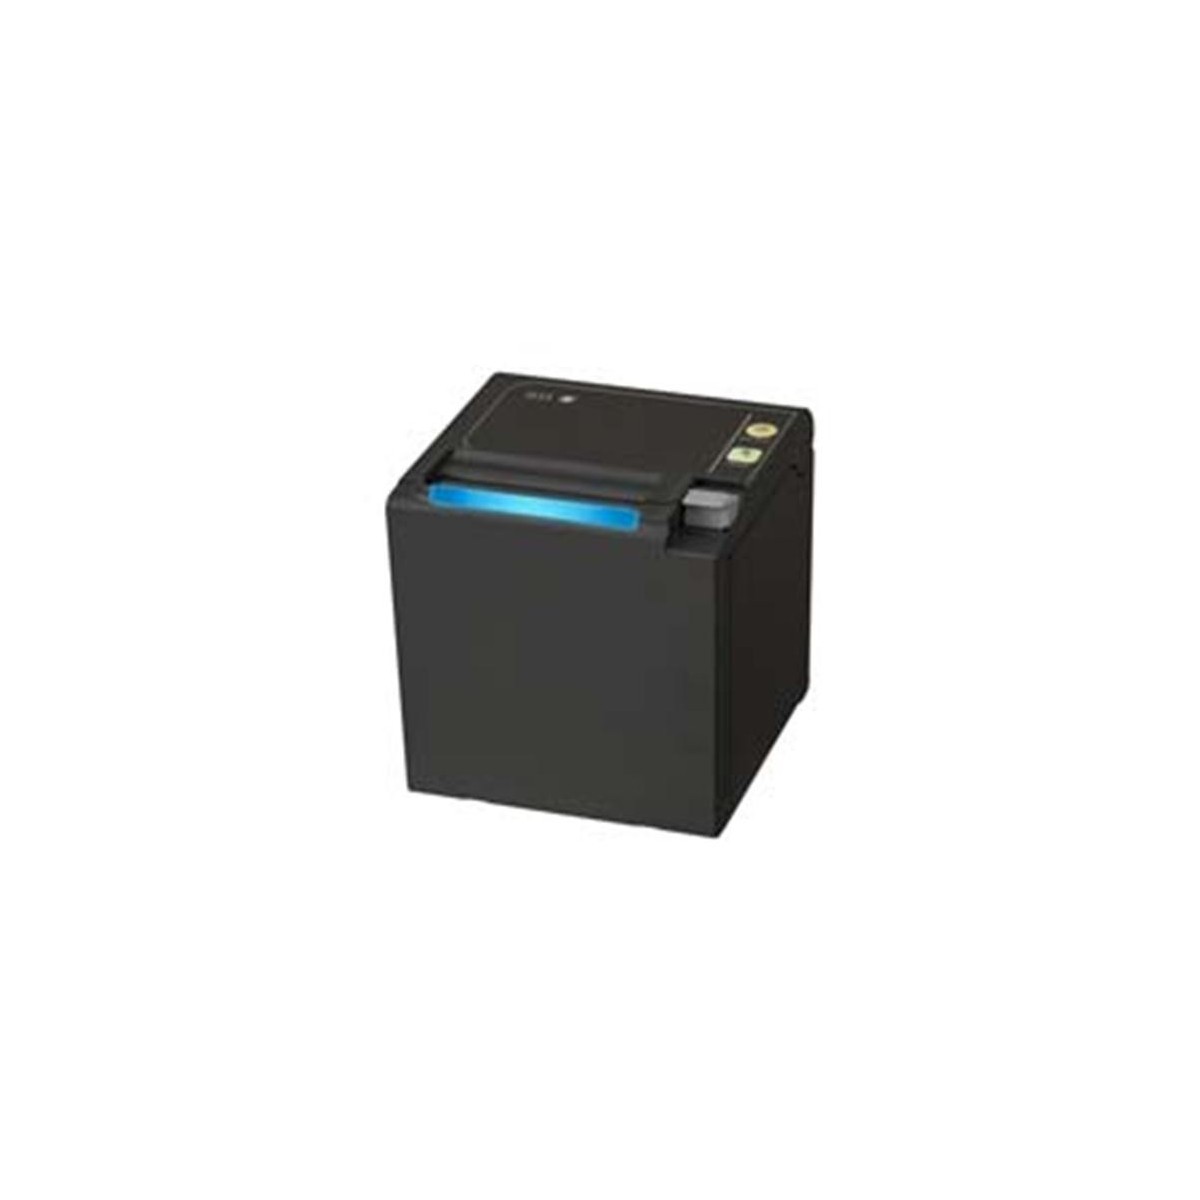 Seiko Instruments RP-E10-K3FJ1-E-C5 - Thermal - POS printer - 203 x 203 DPI - 350 mm/sec - 8.3 cm - 58 - 80 mm